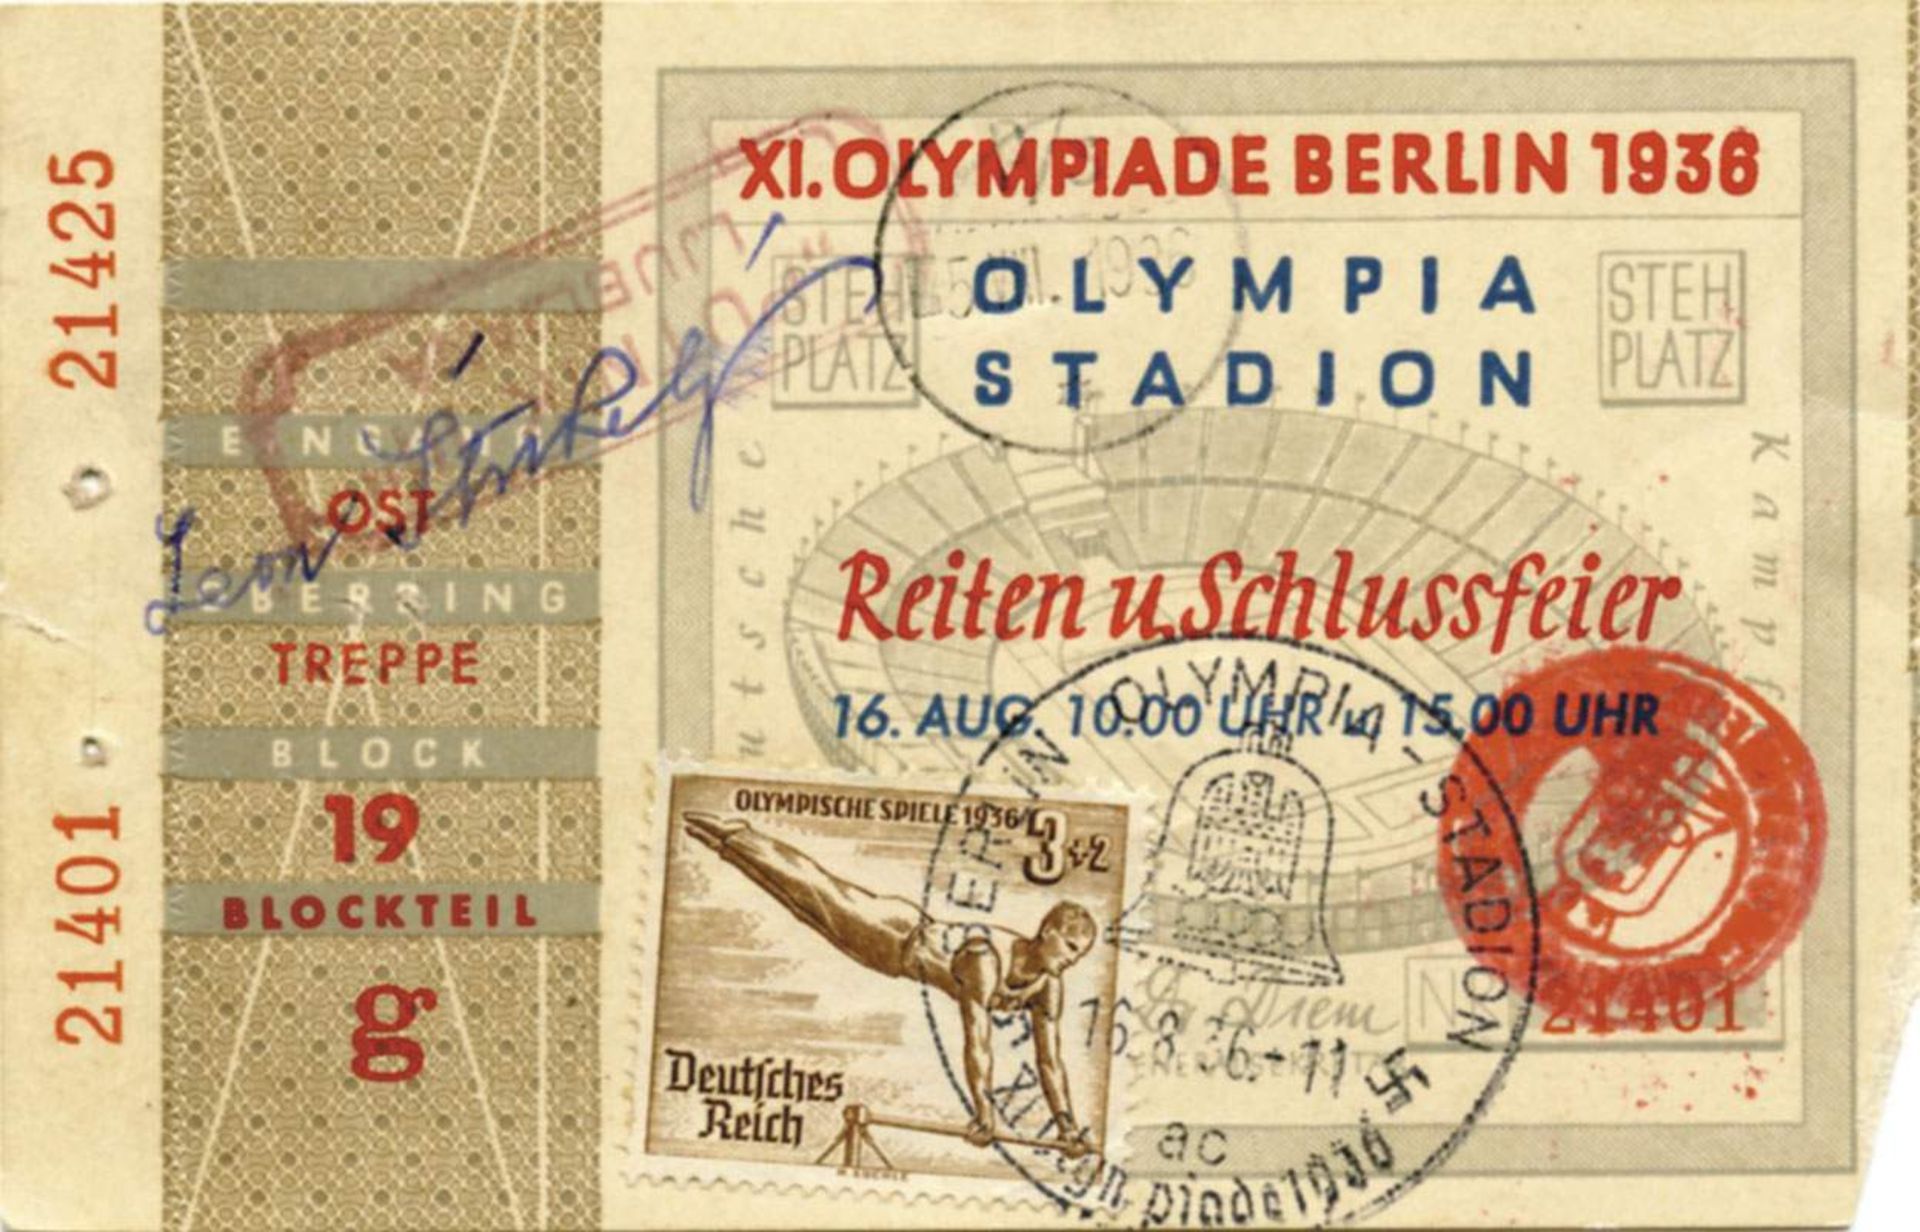 Olympic Games 1936 Autographed Ticket - Original ticket 1936 "Reiten u. Schlussfeier 16.8.1936"